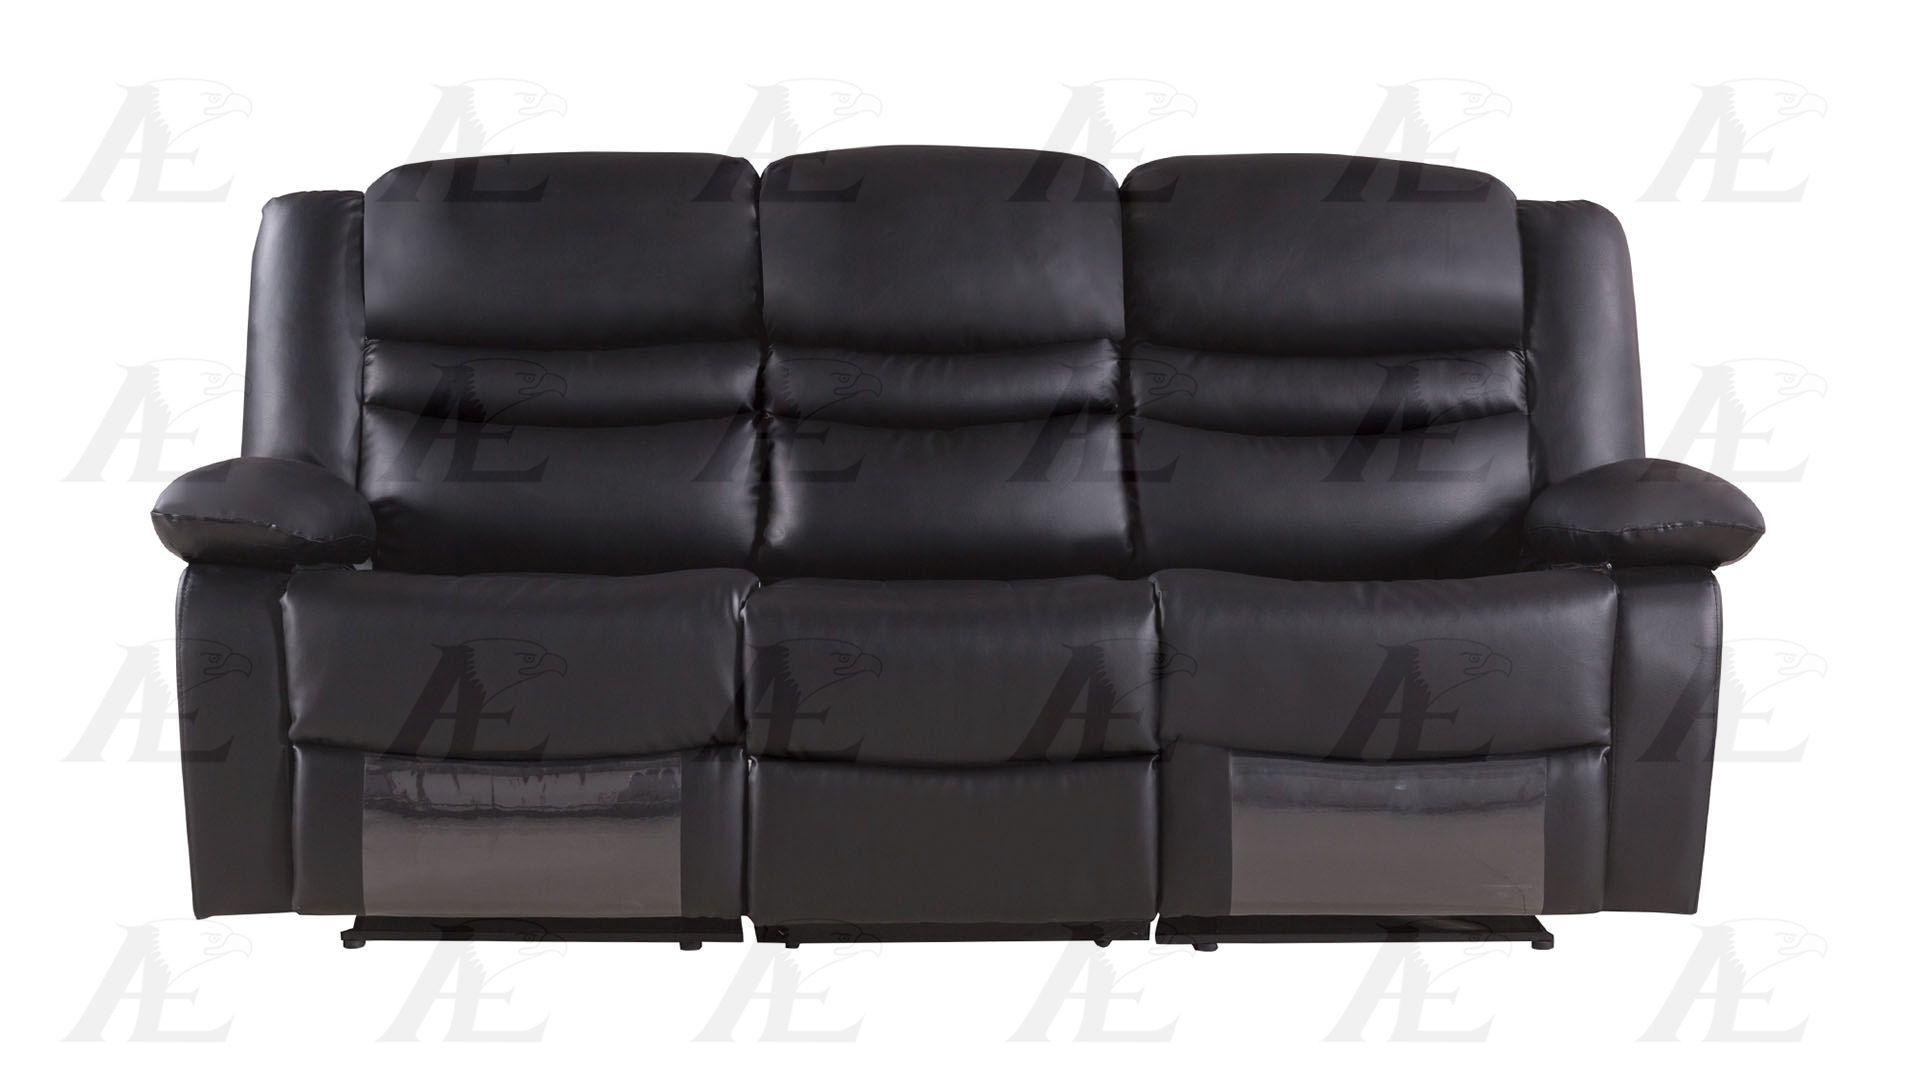 

    
American Eagle Furniture AE-D823-BK Black Recliner Sofa and Loveseat Set Bonded Leather 2Pcs Modern
